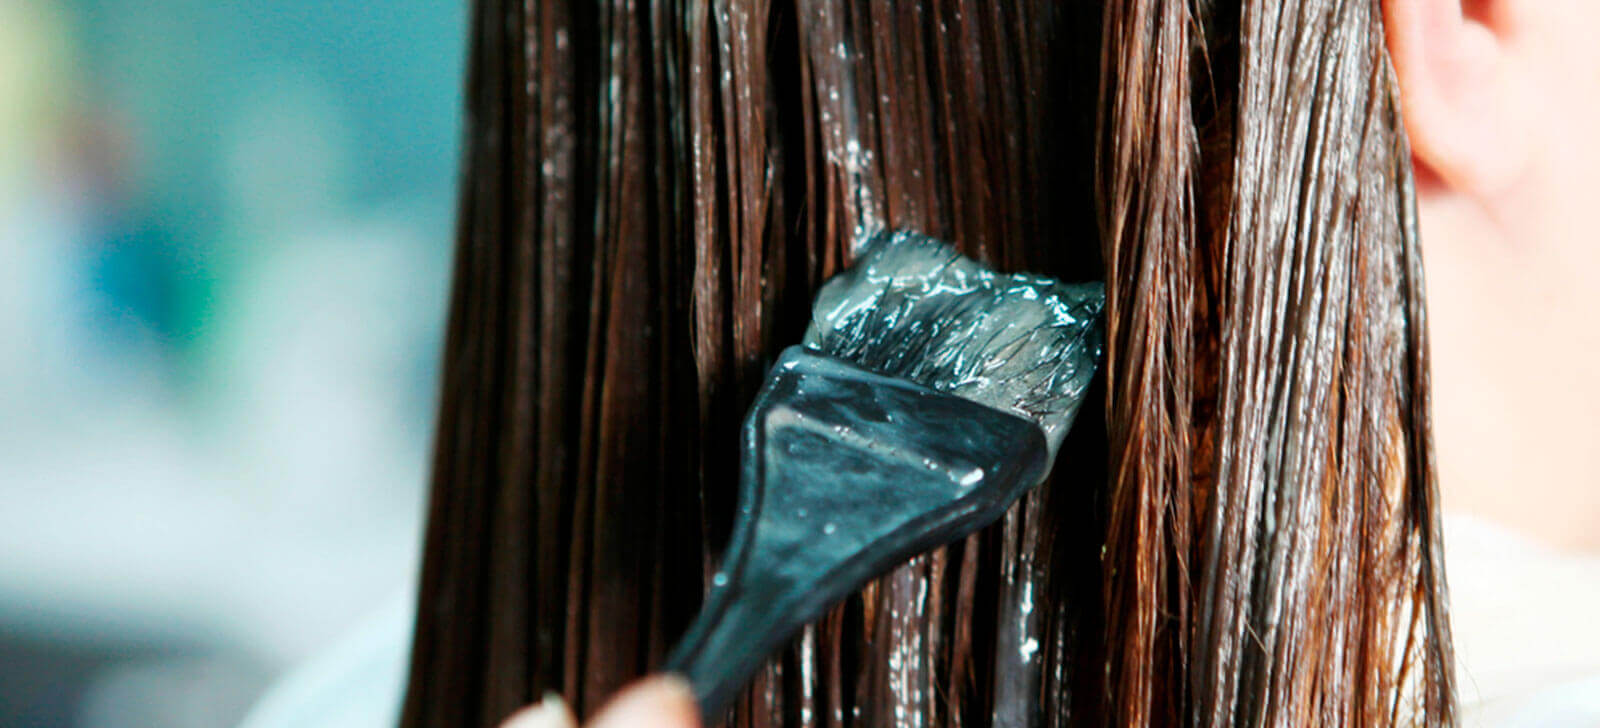 farmacia manipulacao campinas nova natural blog natureza magistral cabelo queda cabelo principais causas produtos quimicos